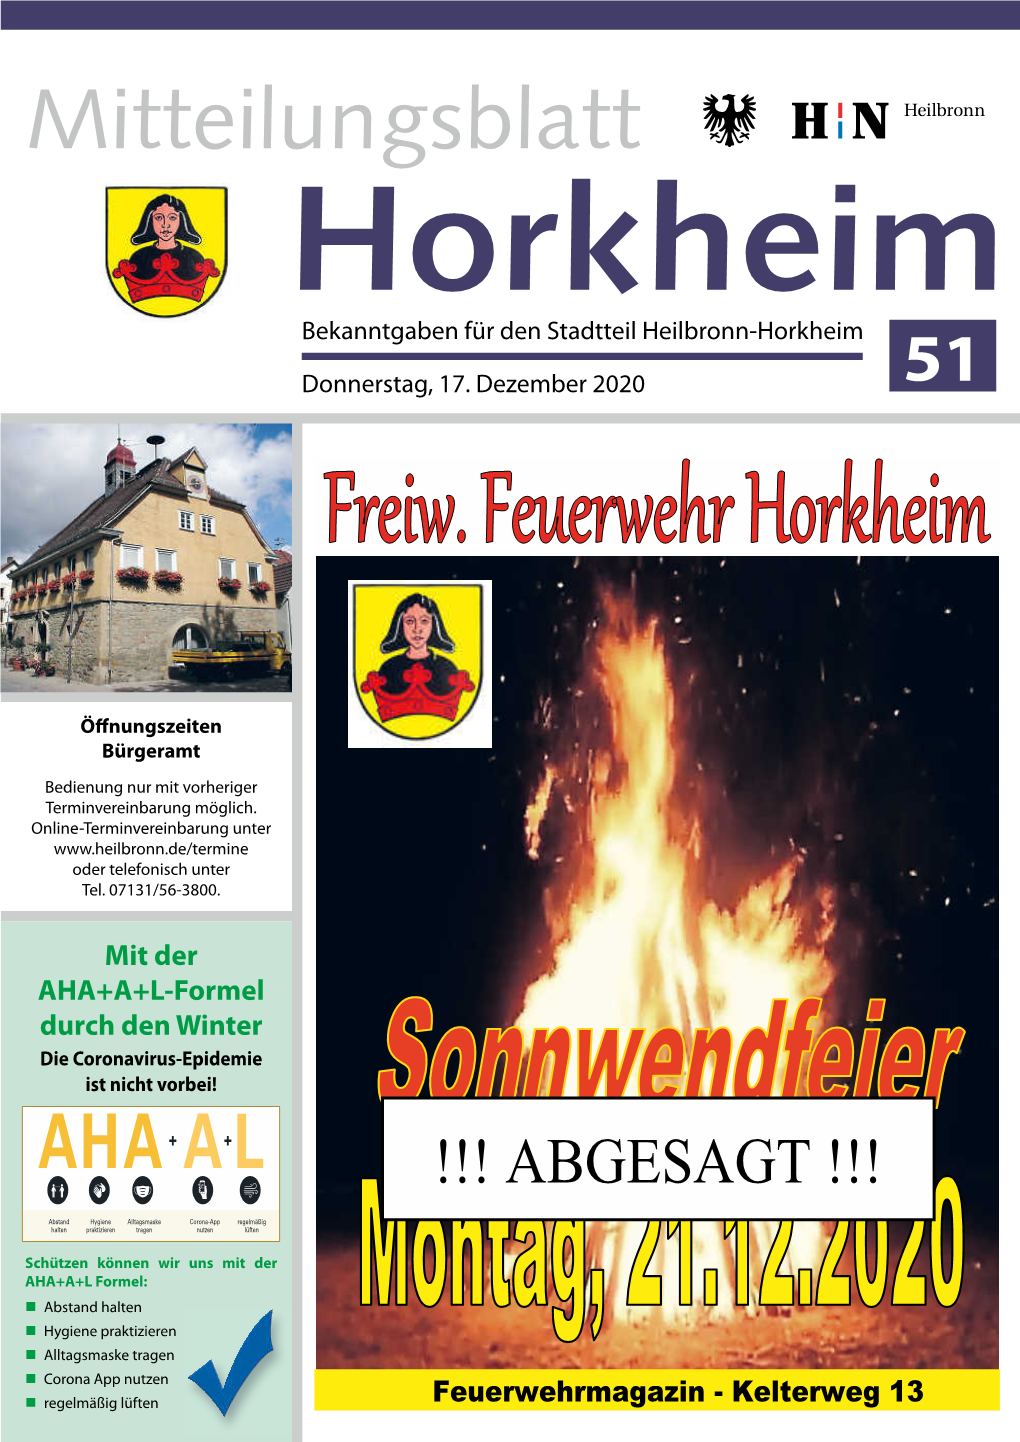 Mitteilungsblatt Horkheim Bekanntgaben Für Den Stadtteil Heilbronn-Horkheim